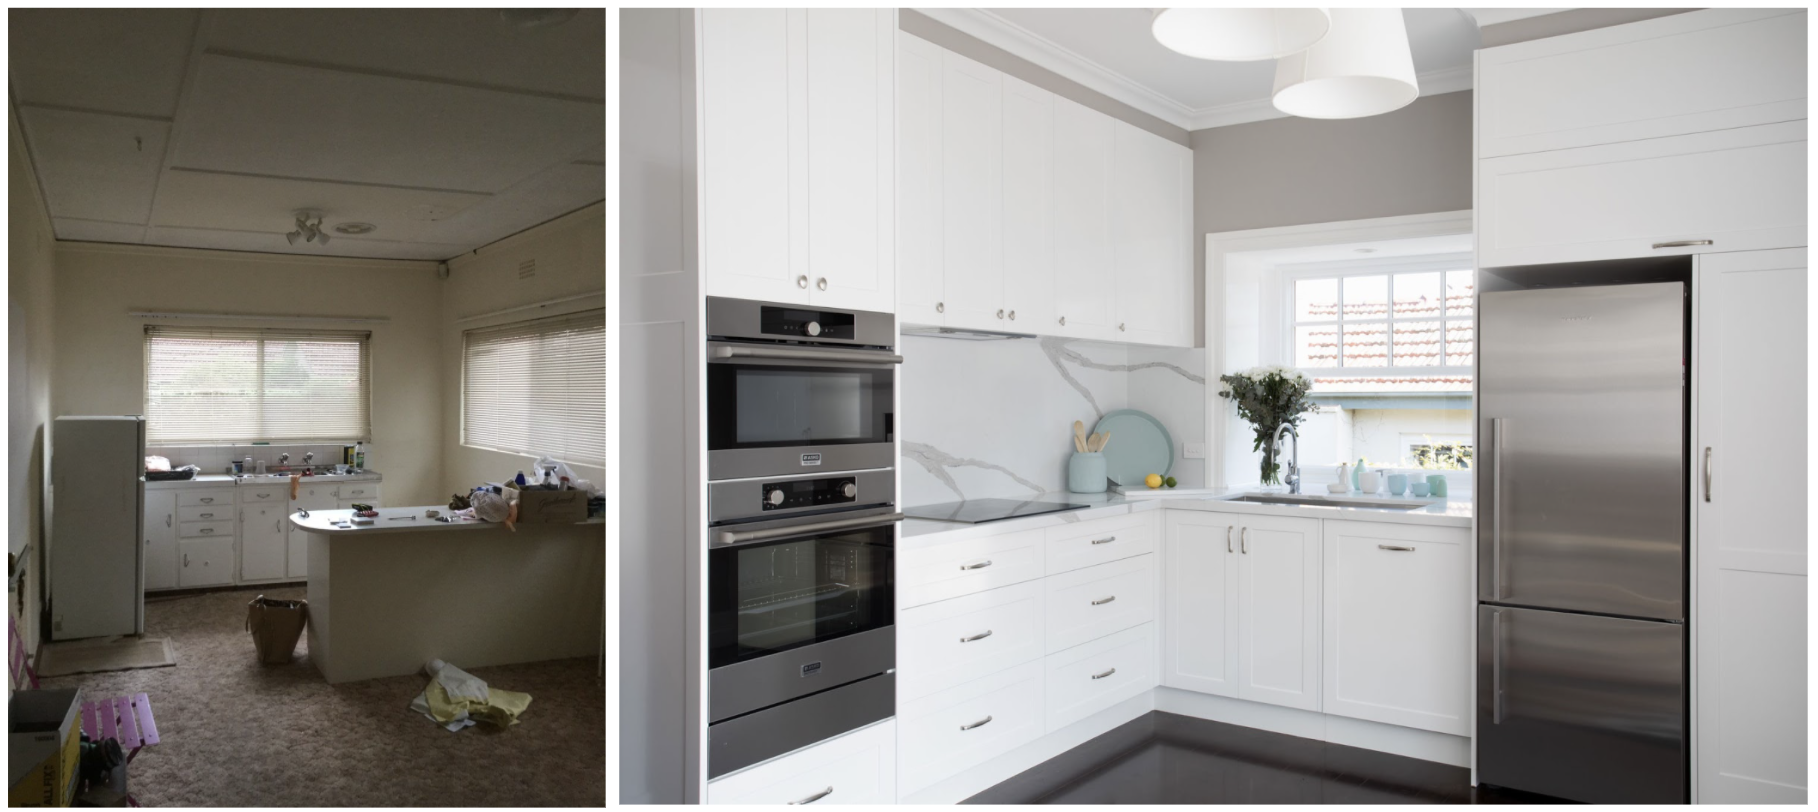 ainslie heritage homes - kitchen redesign